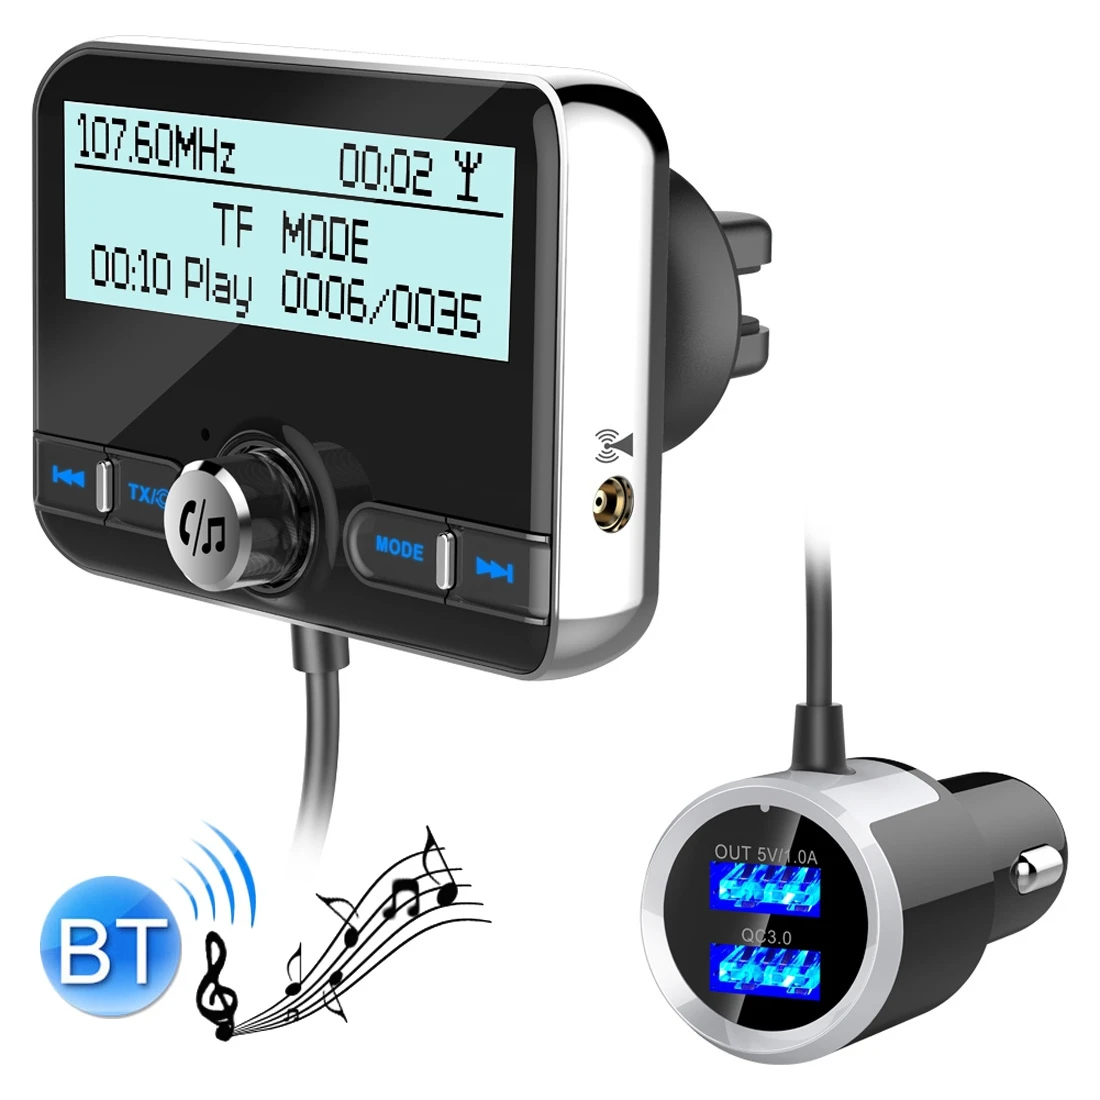 

DAB002 Car DAB Dual USB Charging Smart Bluetooth Digital FM Transmitter MP3 Music Player Car Kit, Support Hands-Free Call & TF